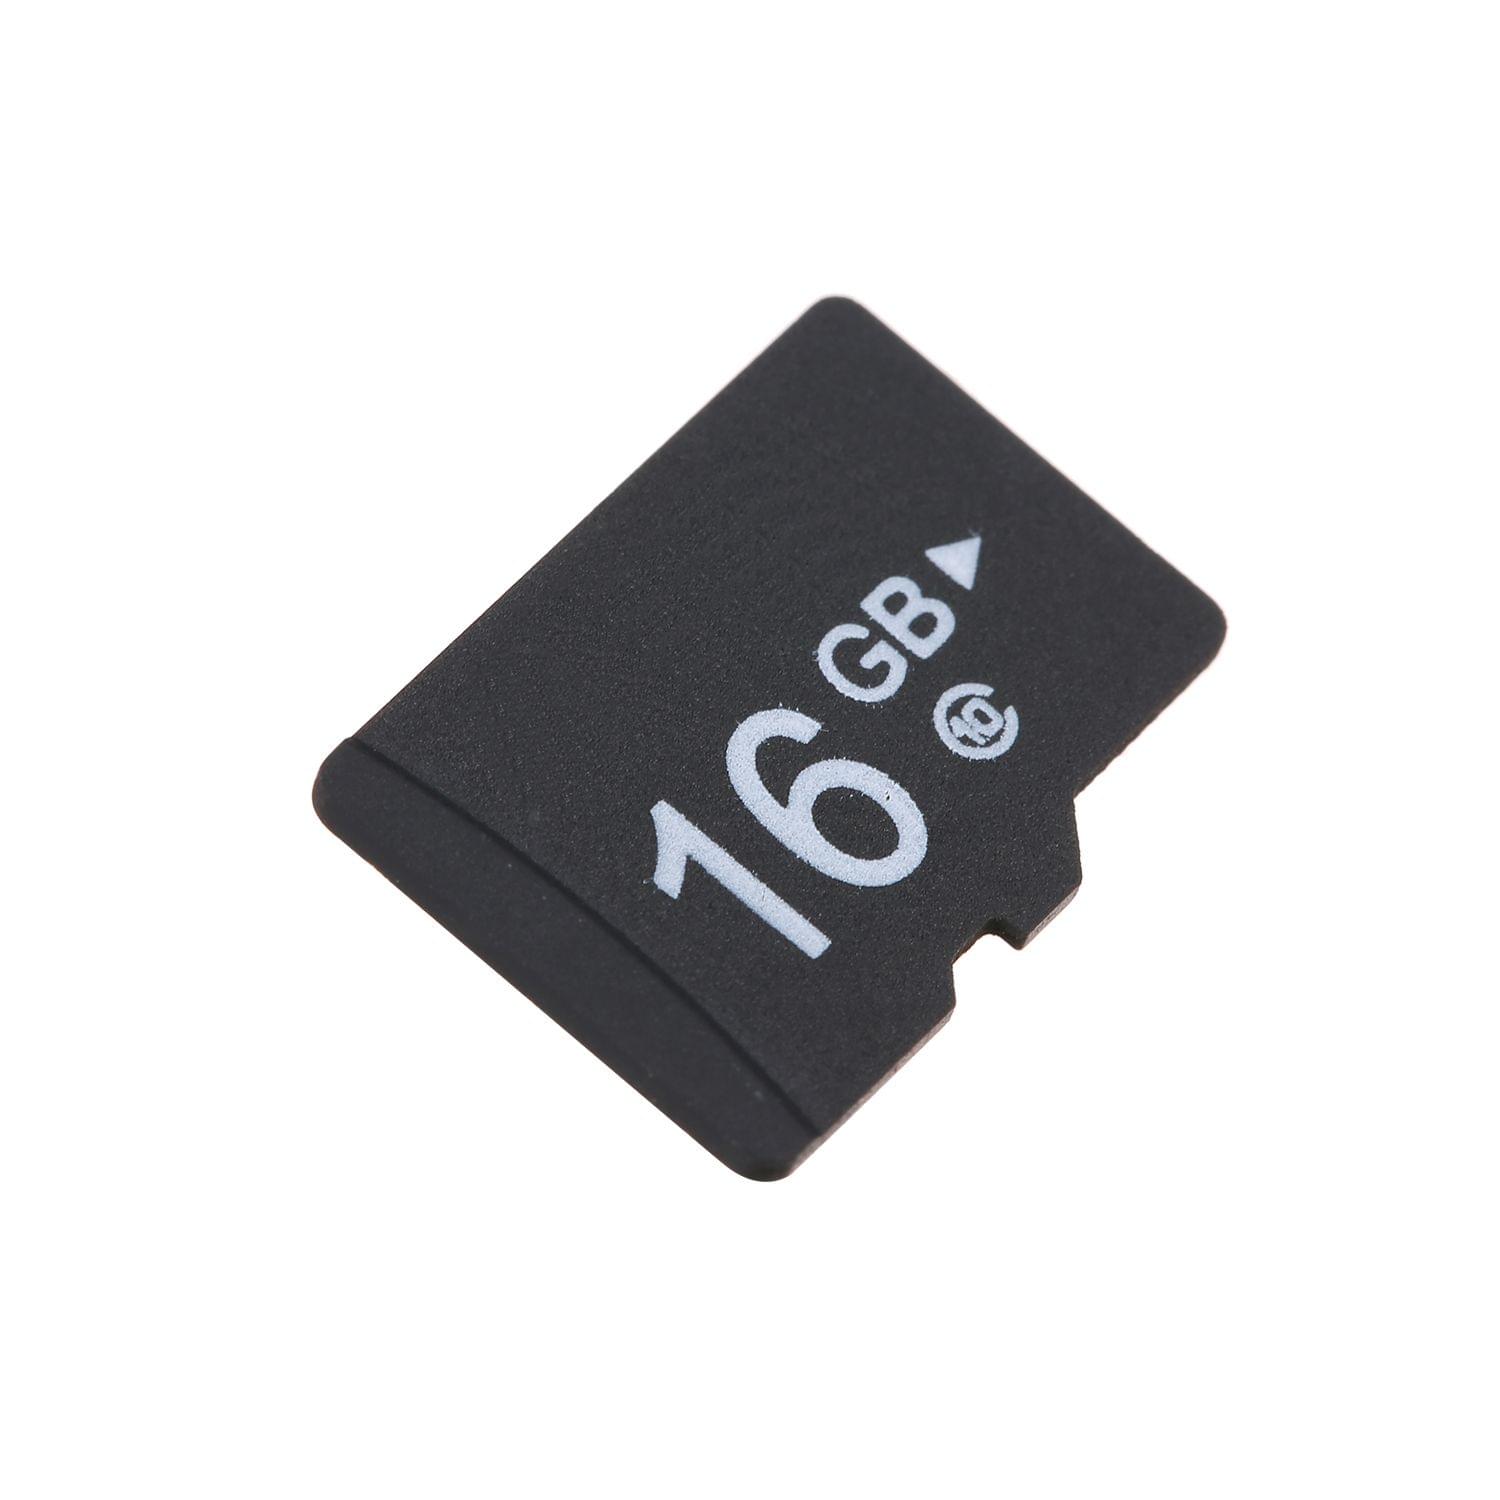 16G TF Card Memory Card for PC Digital Camera Monitor - 16G